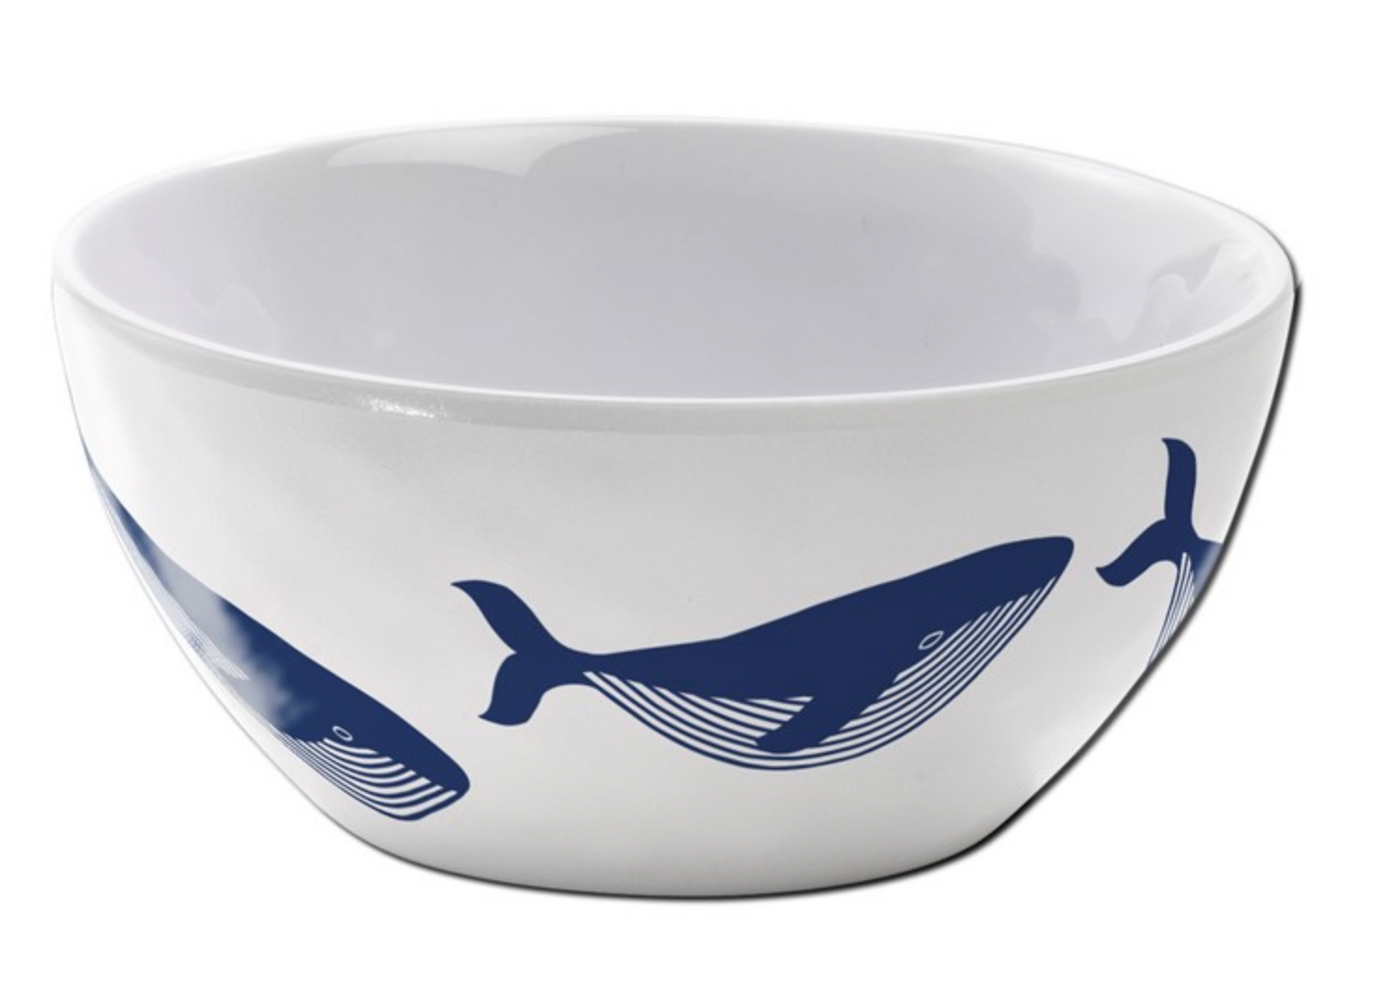 Whales Sauce Bowl